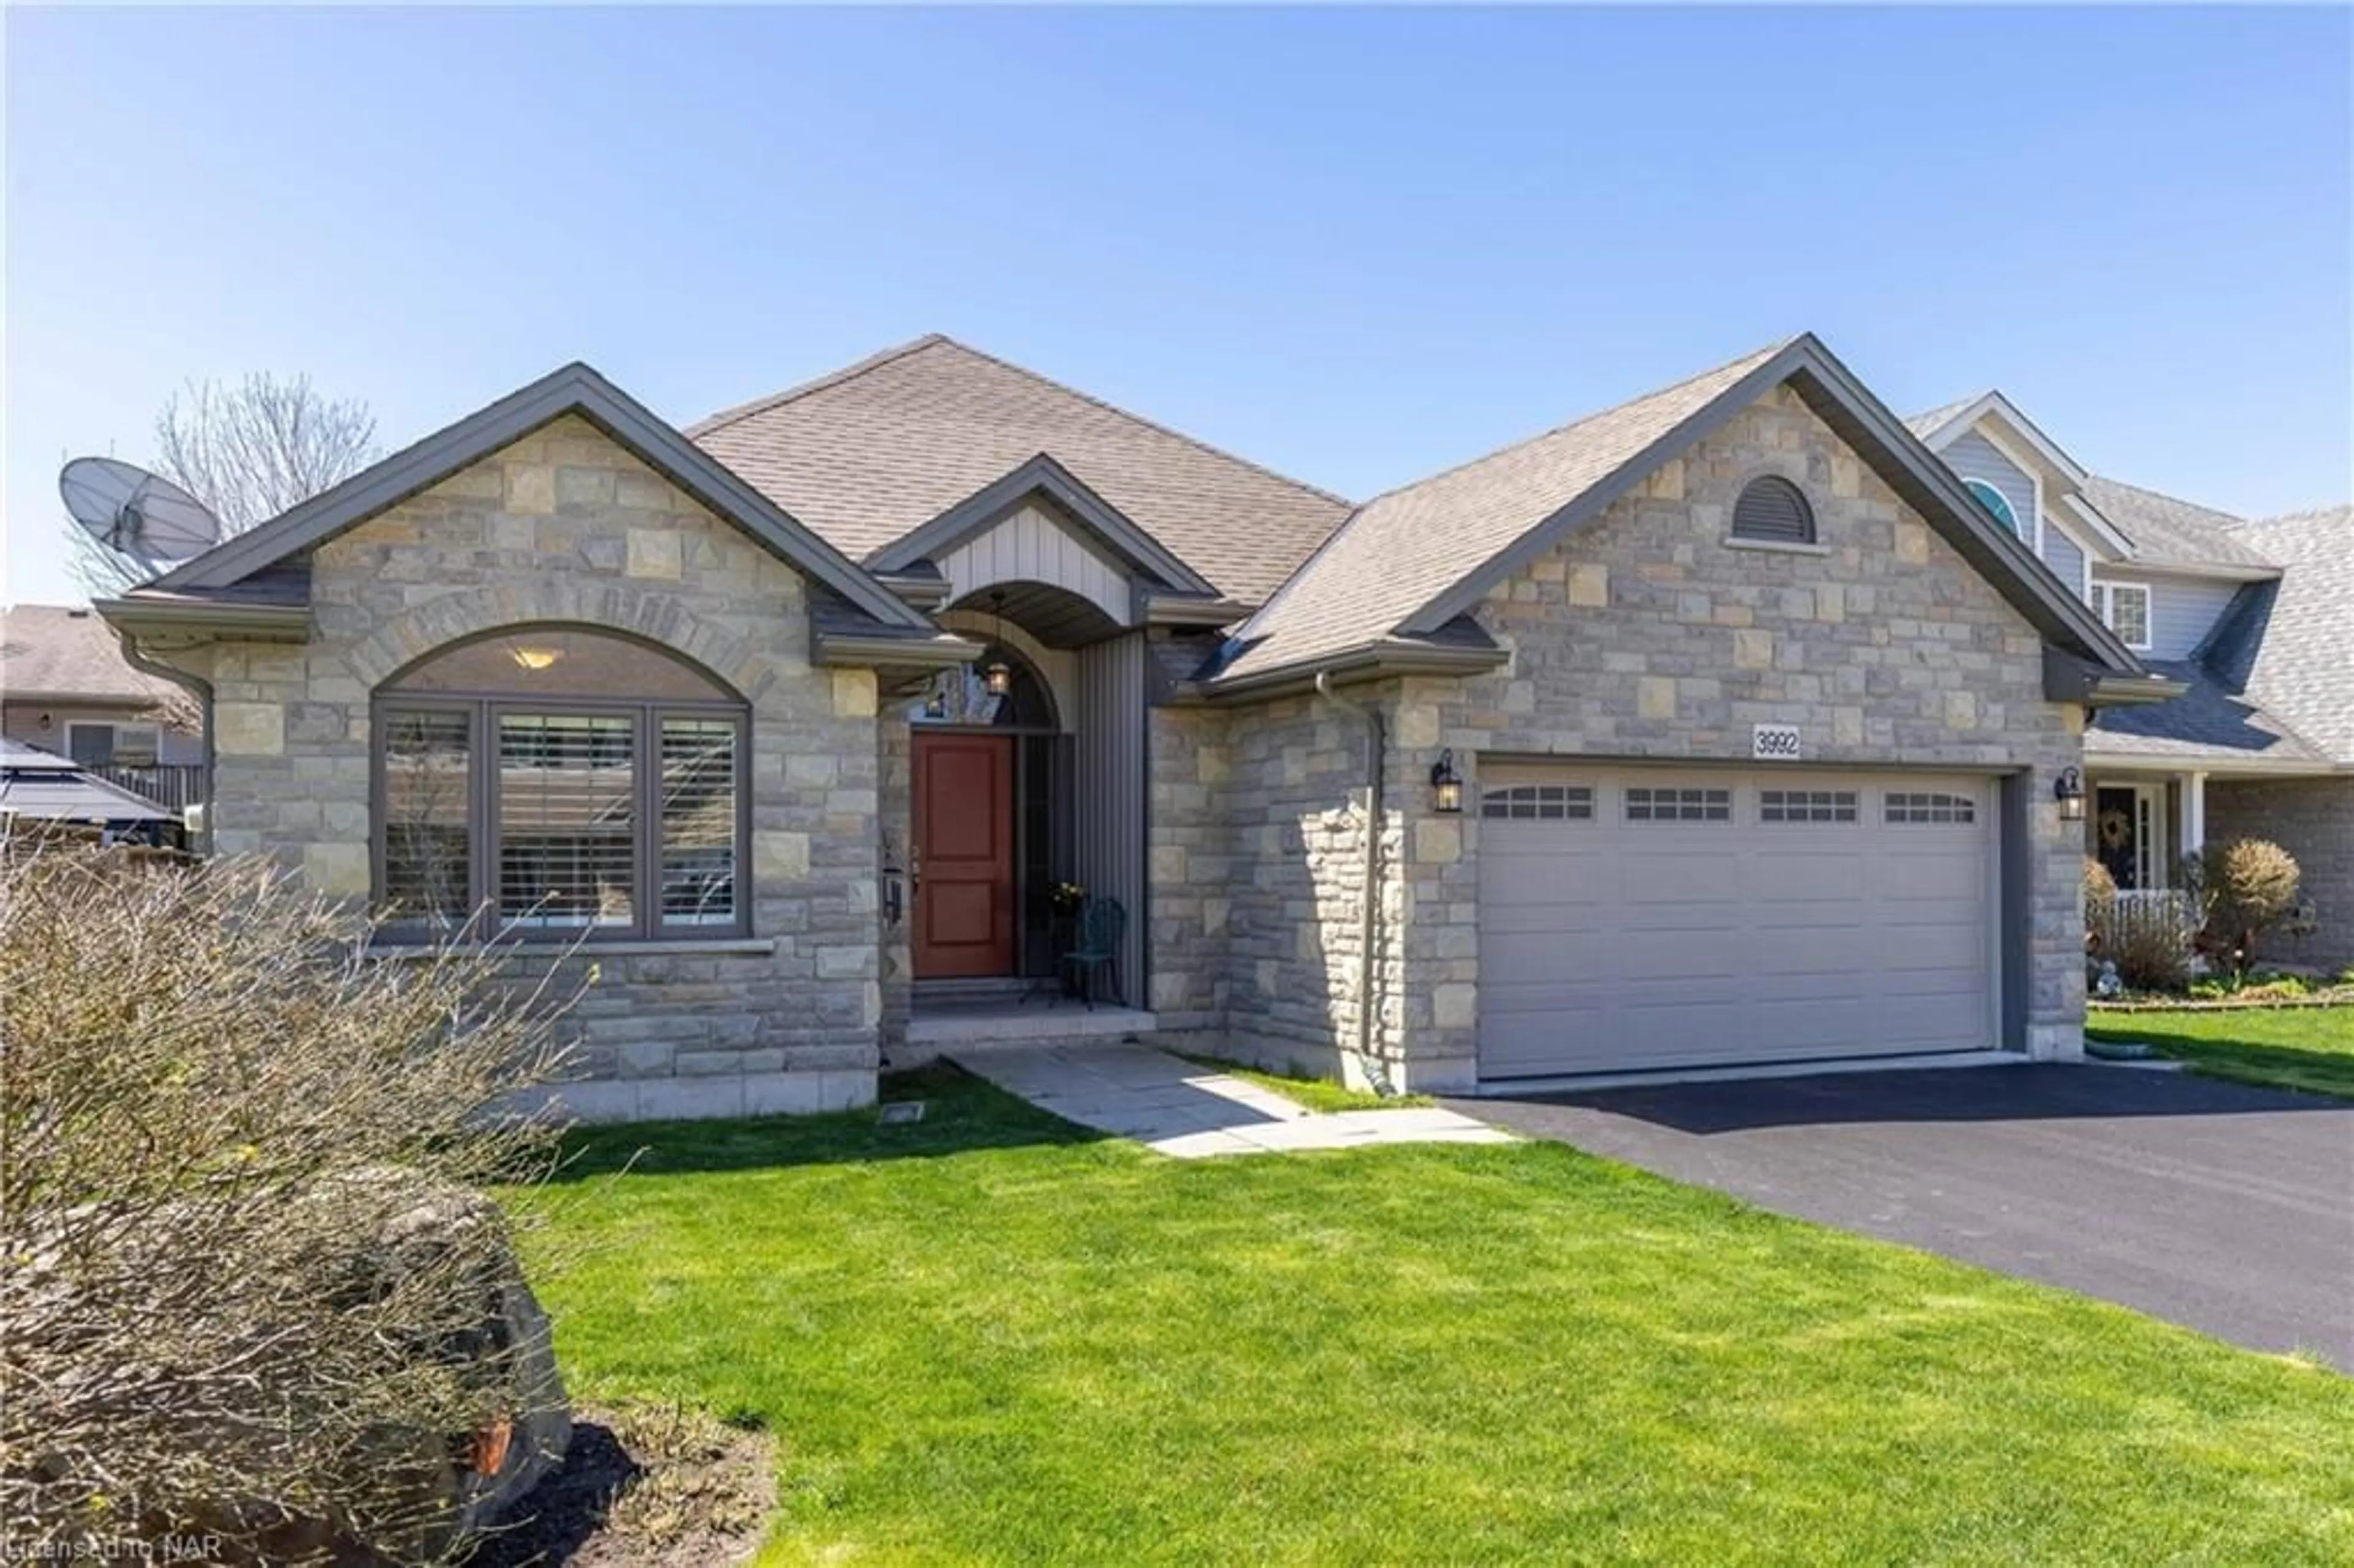 Home with brick exterior material for 3992 Azalea Cres, Vineland Ontario L0R 2C0